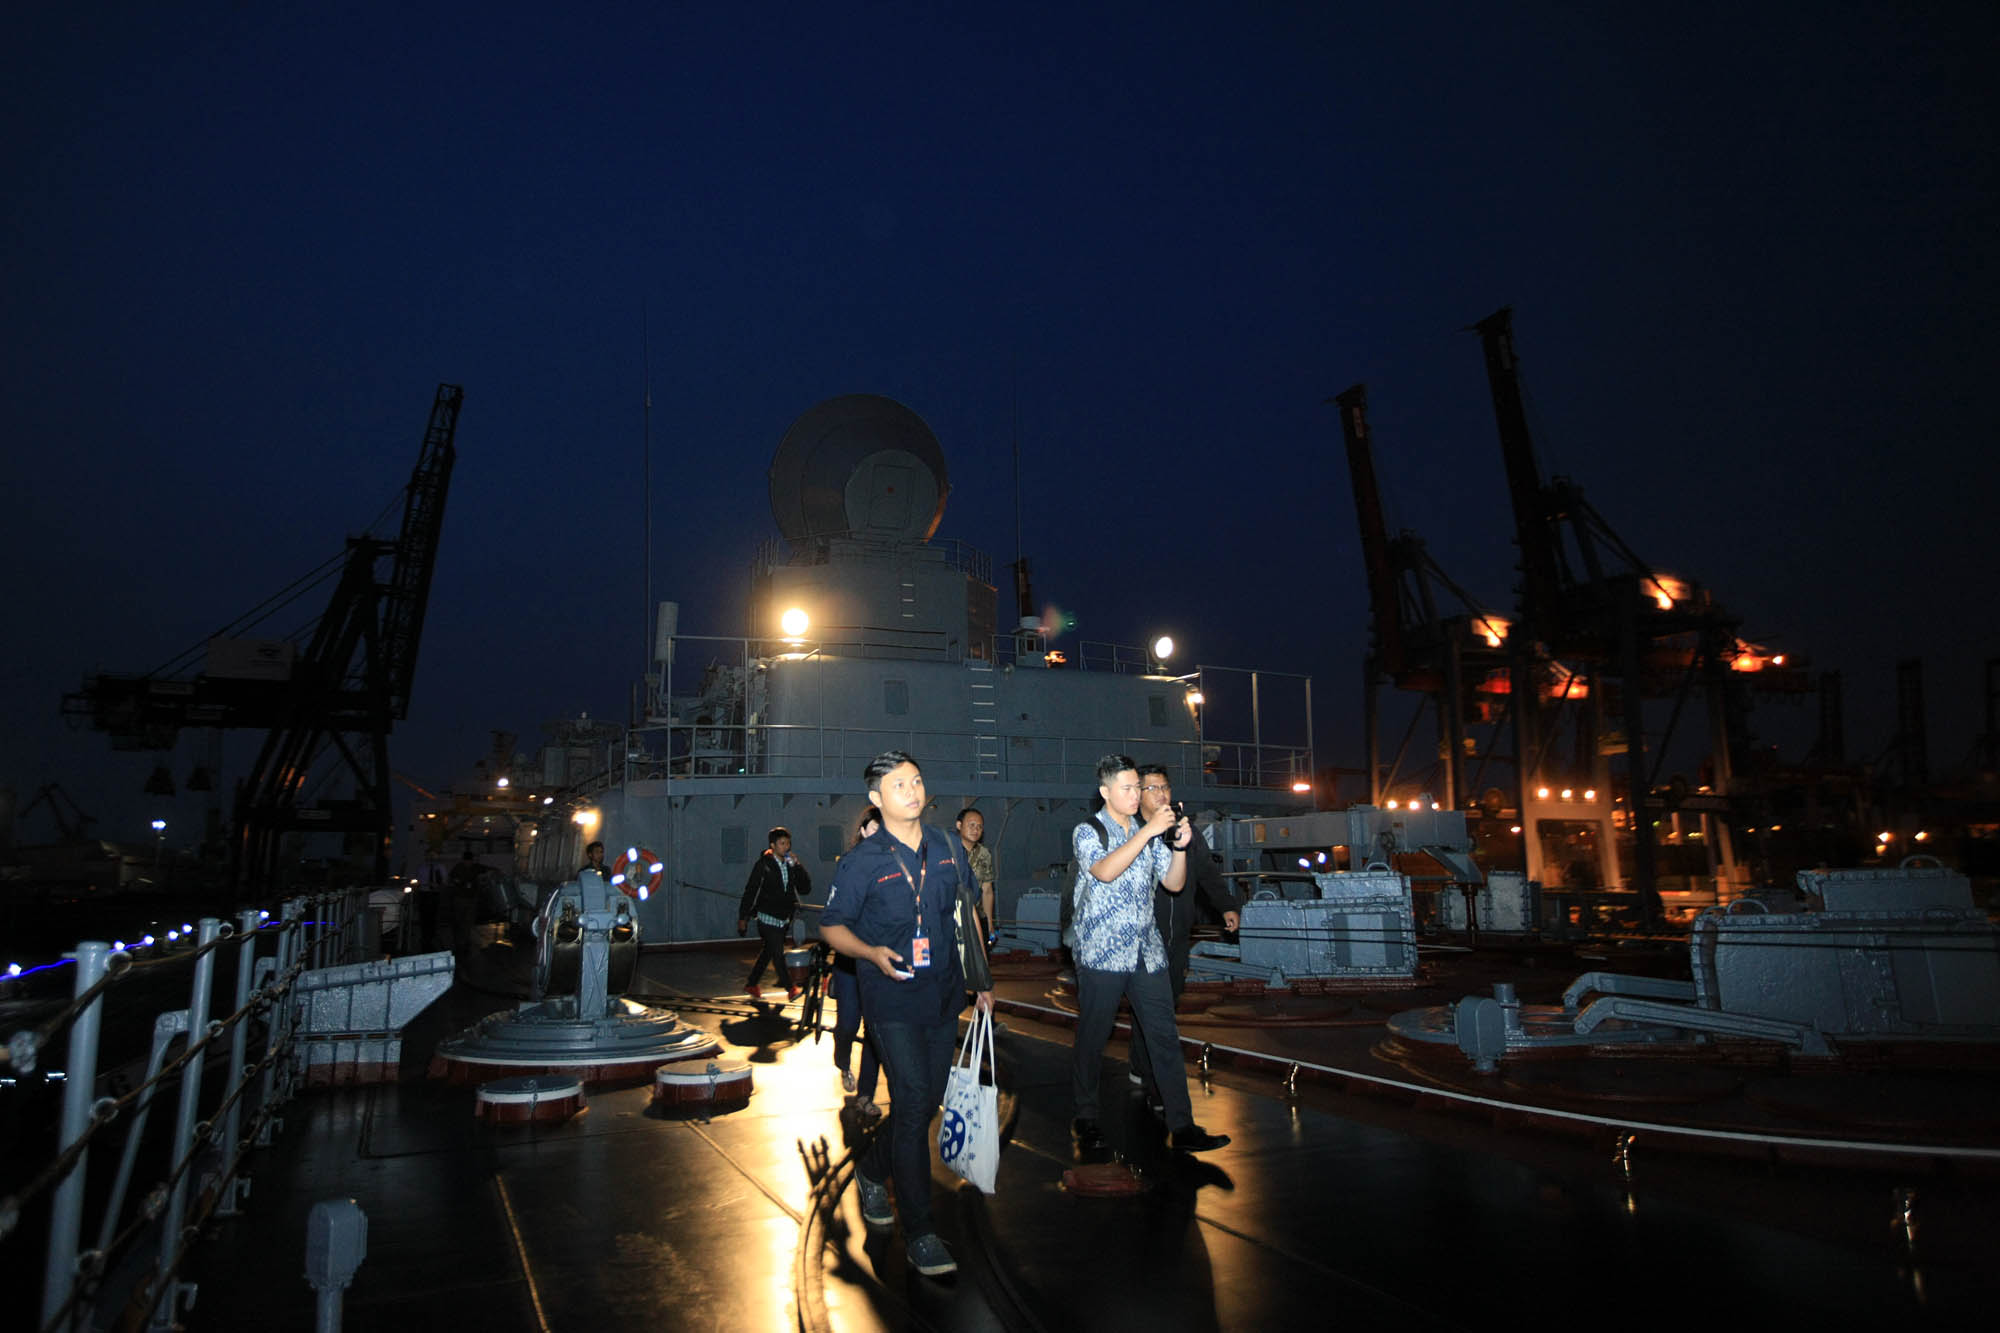 Beberapa wartawan meninjau kapal jelajah ‘Varyag’ saat bersandar di Pelabuhan JICT 2, Tanjung Priok, Jakarta, Selasa (23/5). Kepada para wartawan, Komandan Kapal ‘Varyag’ Alexei Ulyanenko menyebutkan bahwa ada 510 orang awak kapal yang bertugas di kapal jelajah milik Armada Pasifik Rusia ini.